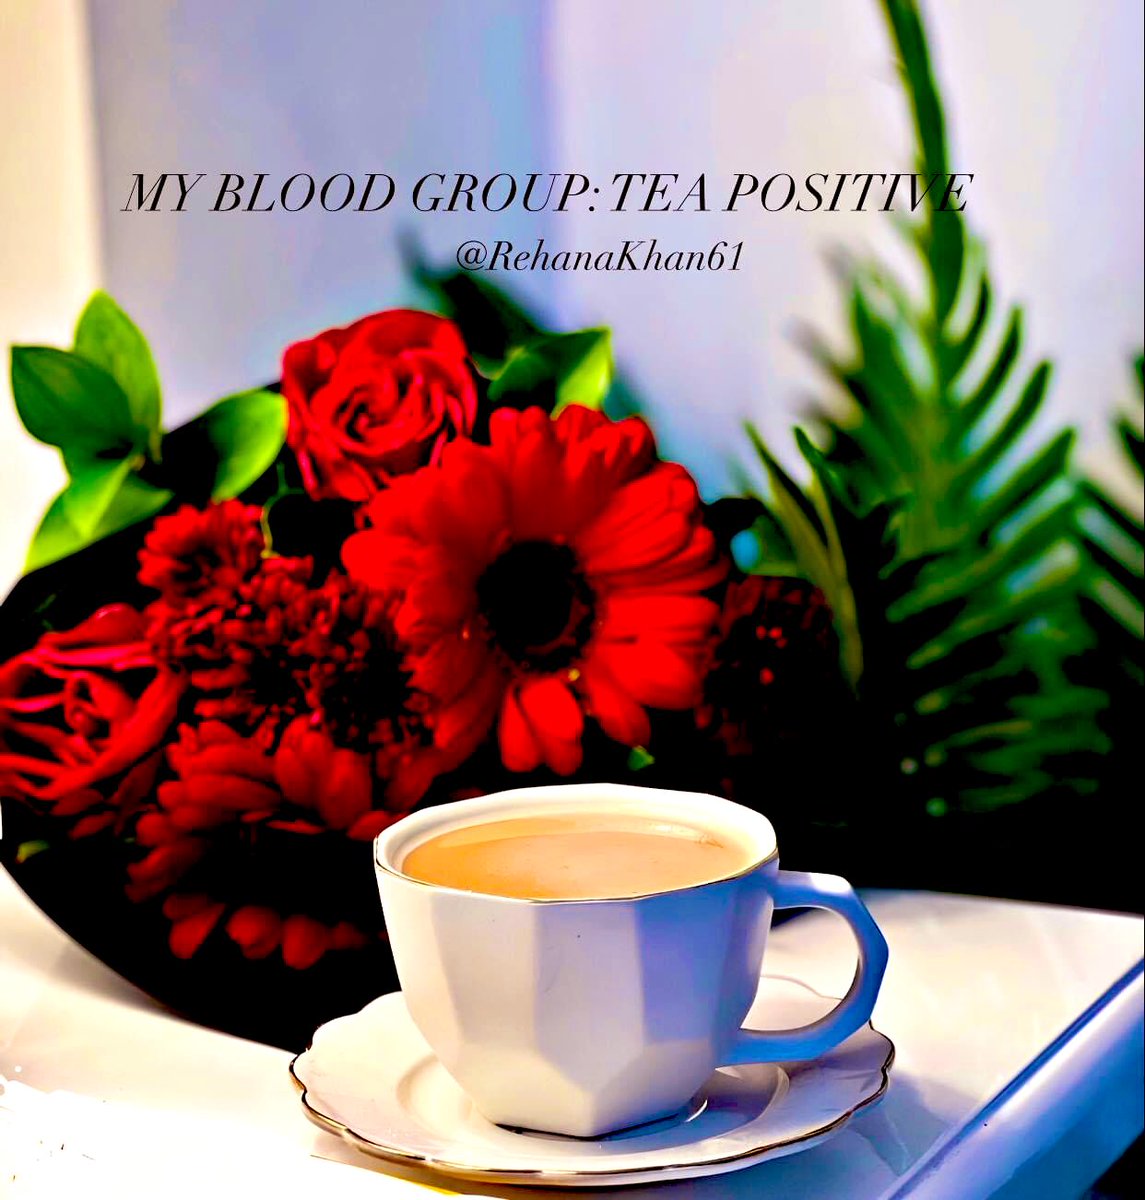 #HappyInternationalTeaDay to you all Tea lovers. Start your day with the aroma of the #tea and bloomed #flowers #Chai

علاجِ عِشق جو پوچھا میں نے طبیب سے
دھیمے سے لہجے میں بولا–چائے پیا کرو

My blood group is Tea Positive.😁What's yours? #InternationalTeaDay